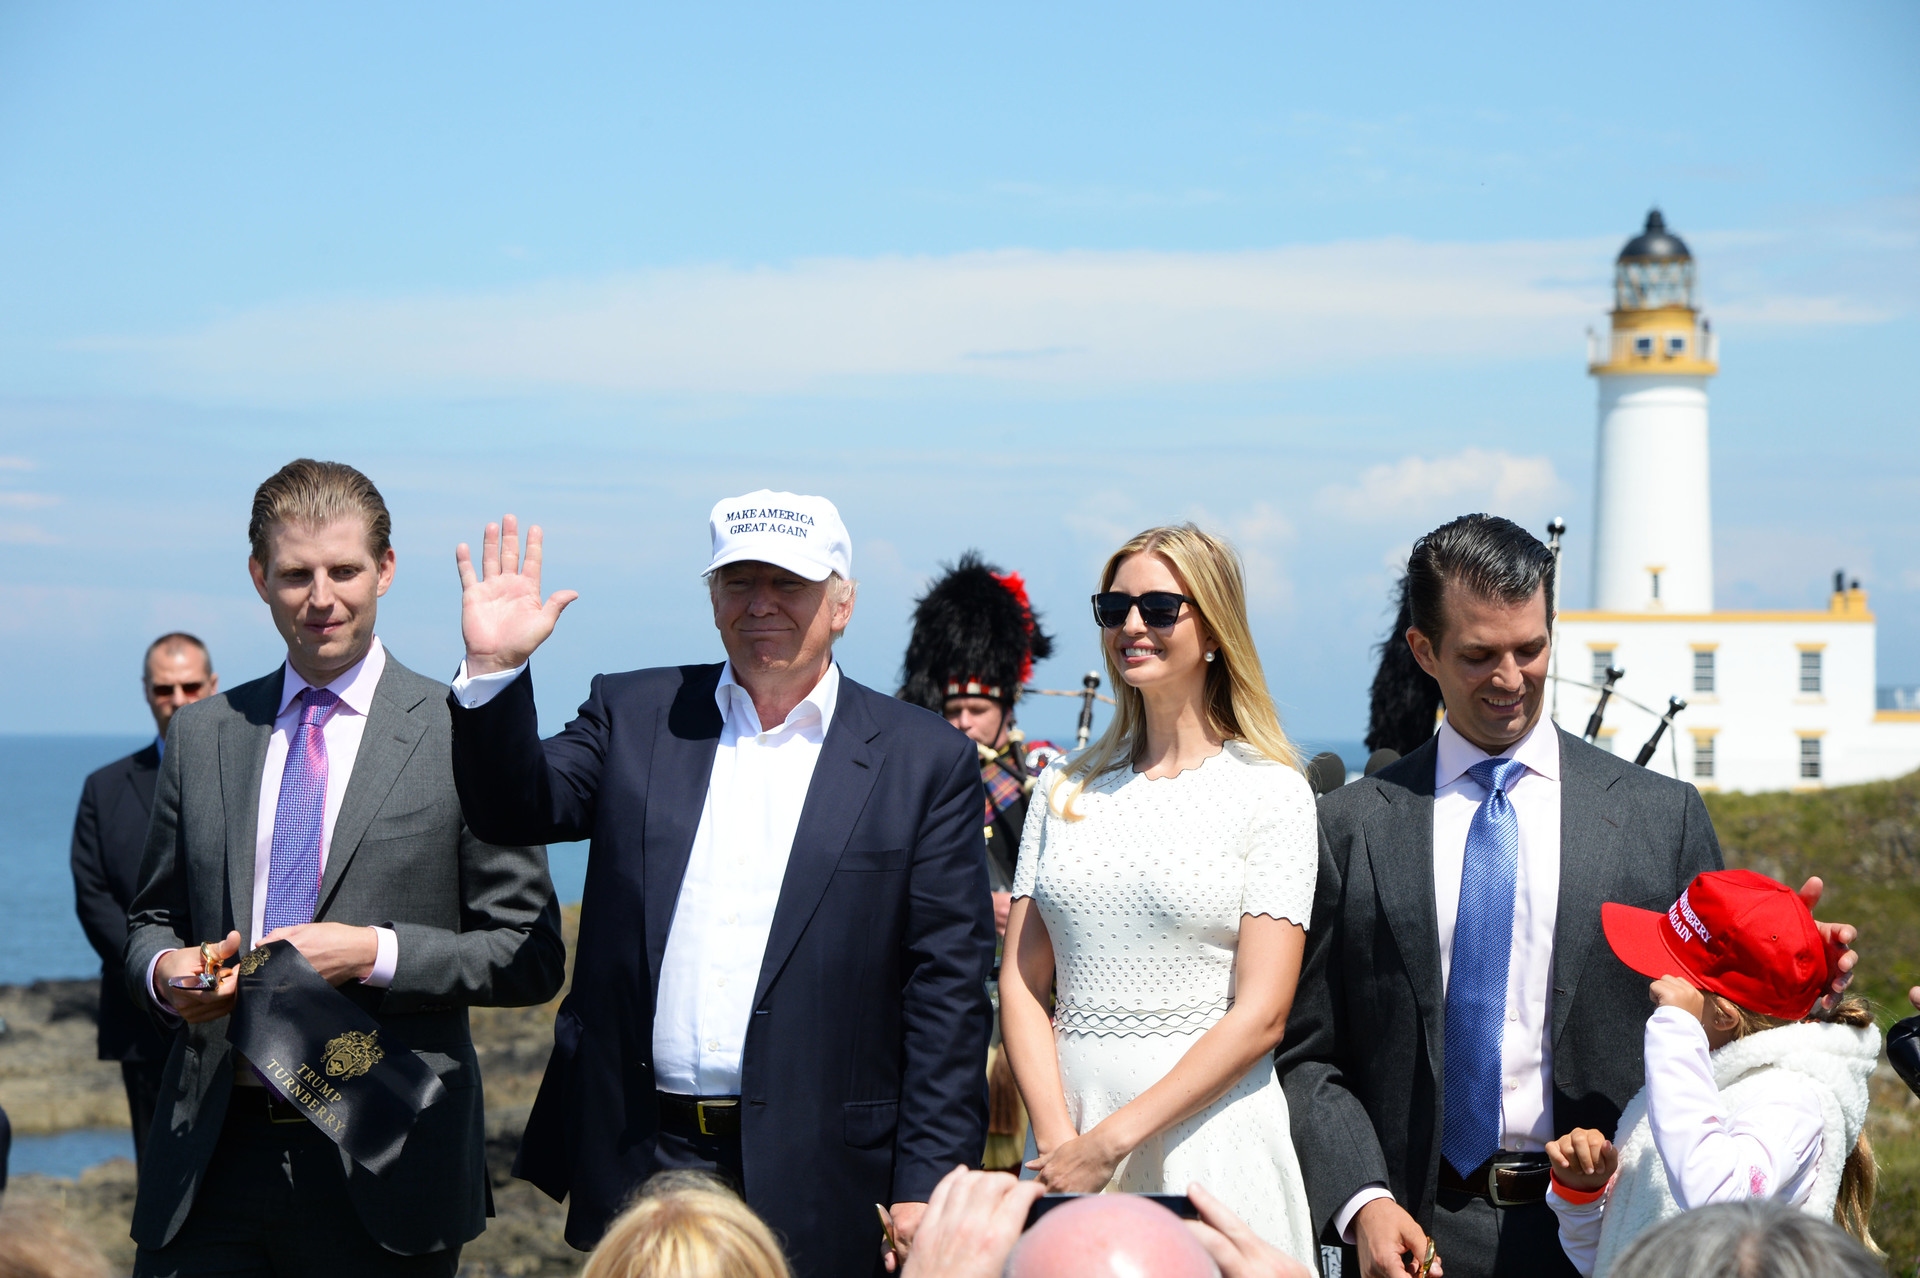 Donald Trump's son's Eric Trump, Donald Trump, Donald Trump Jr and Ivanka Trump officially open Trump Turnberry in 2016.